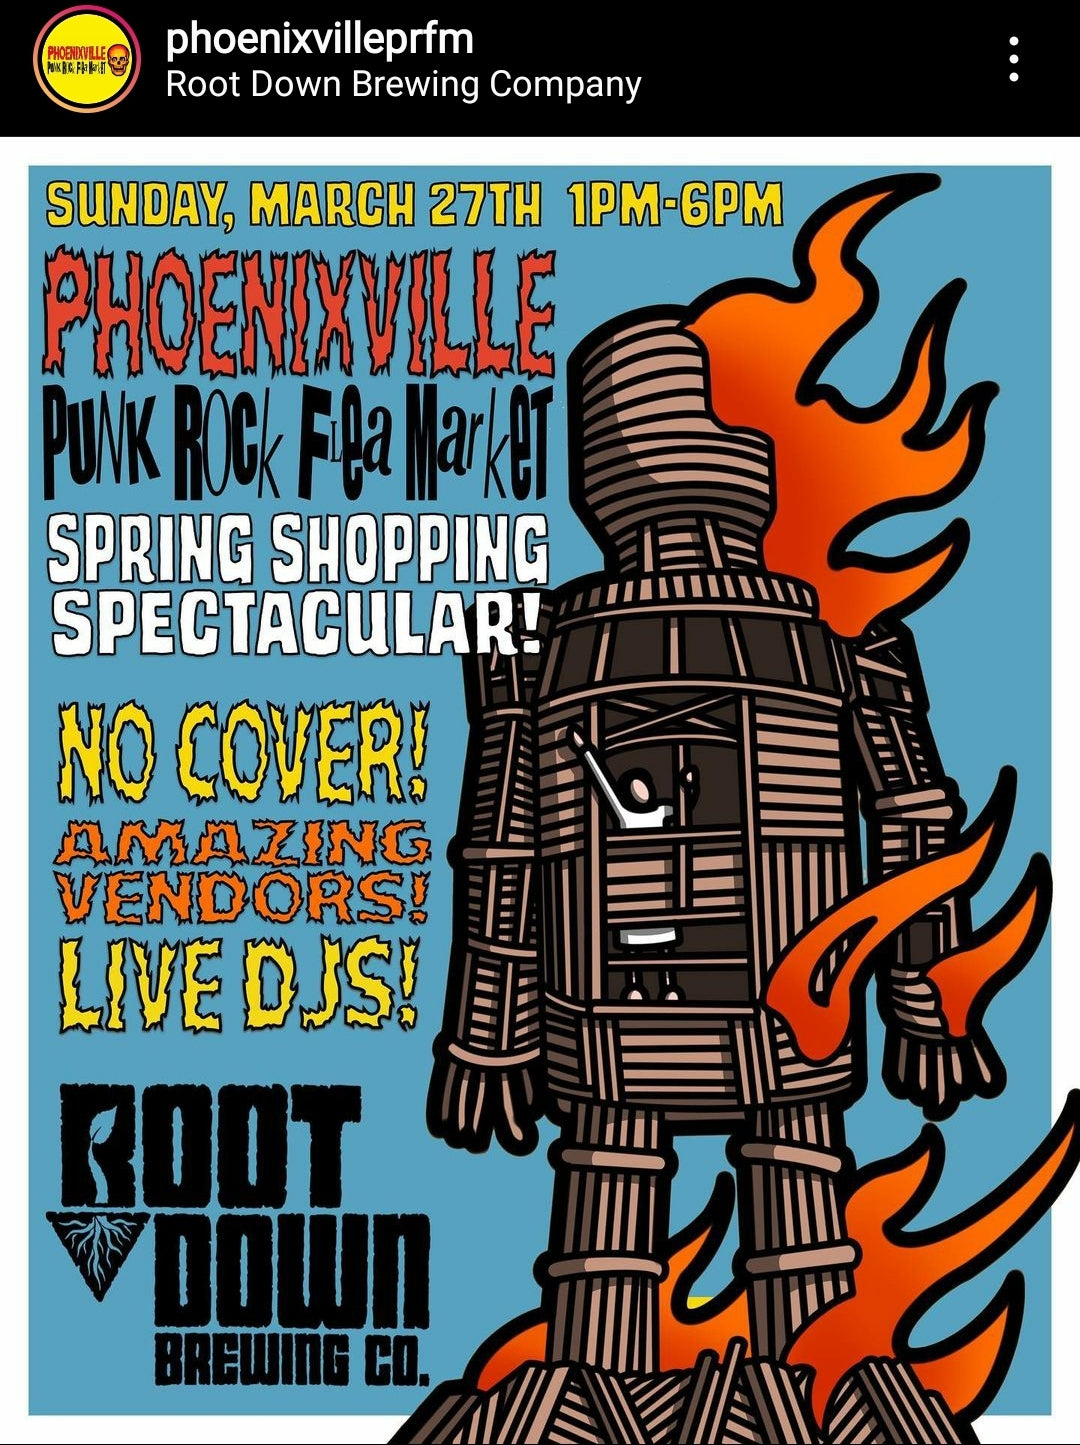 See you on Sun, 3/27/22 at Phoenixville Punk Rock Flea Market!